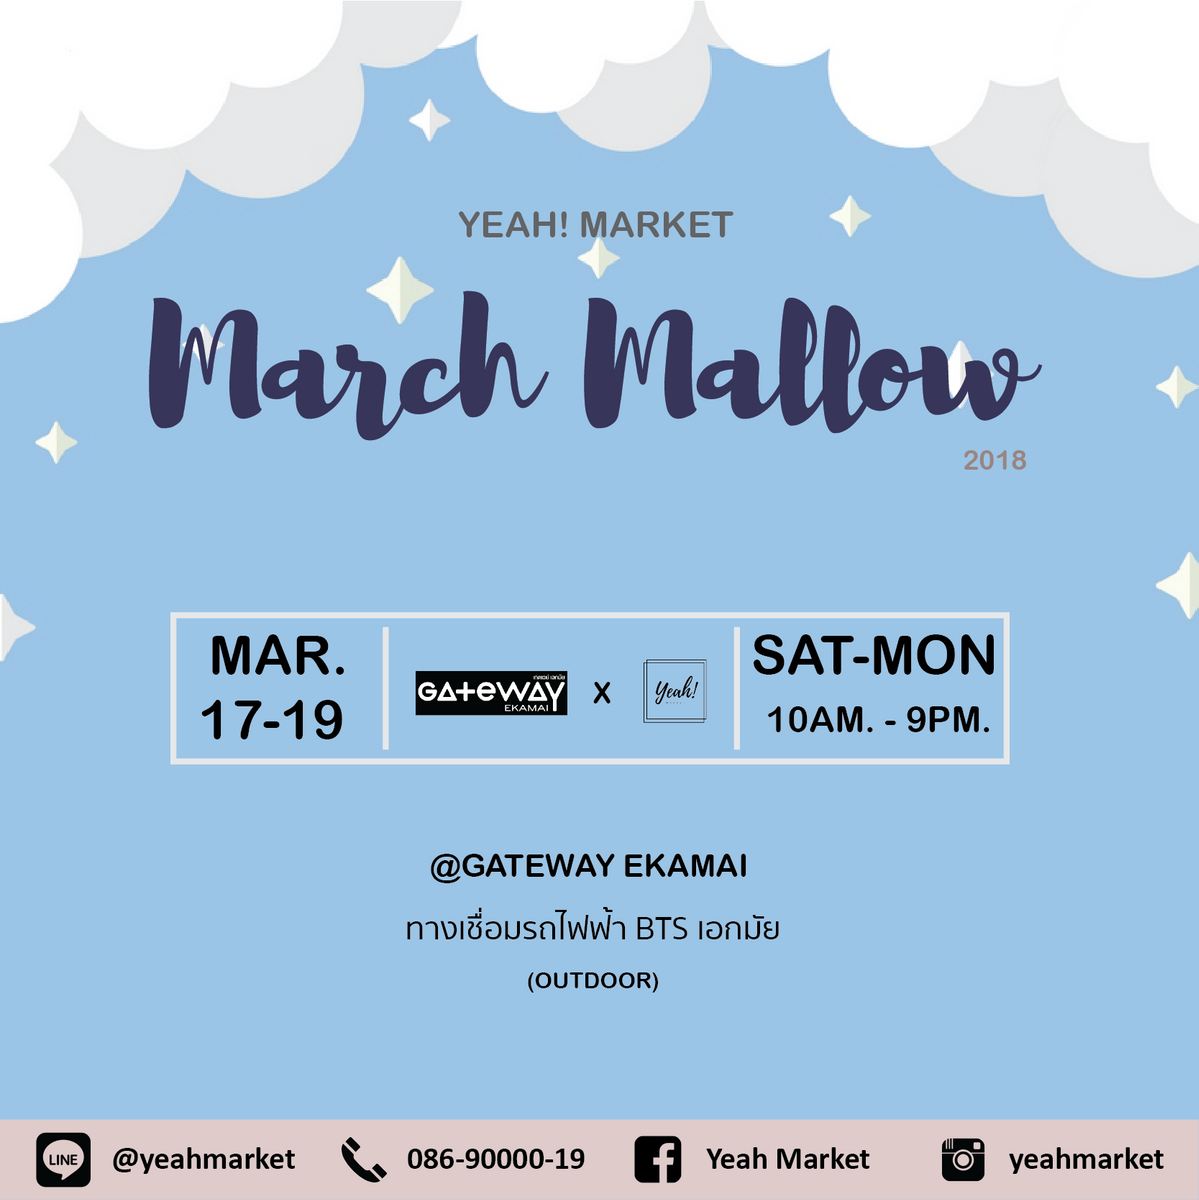 YEAH! MARKET ในตีมงาน “March Mallow”